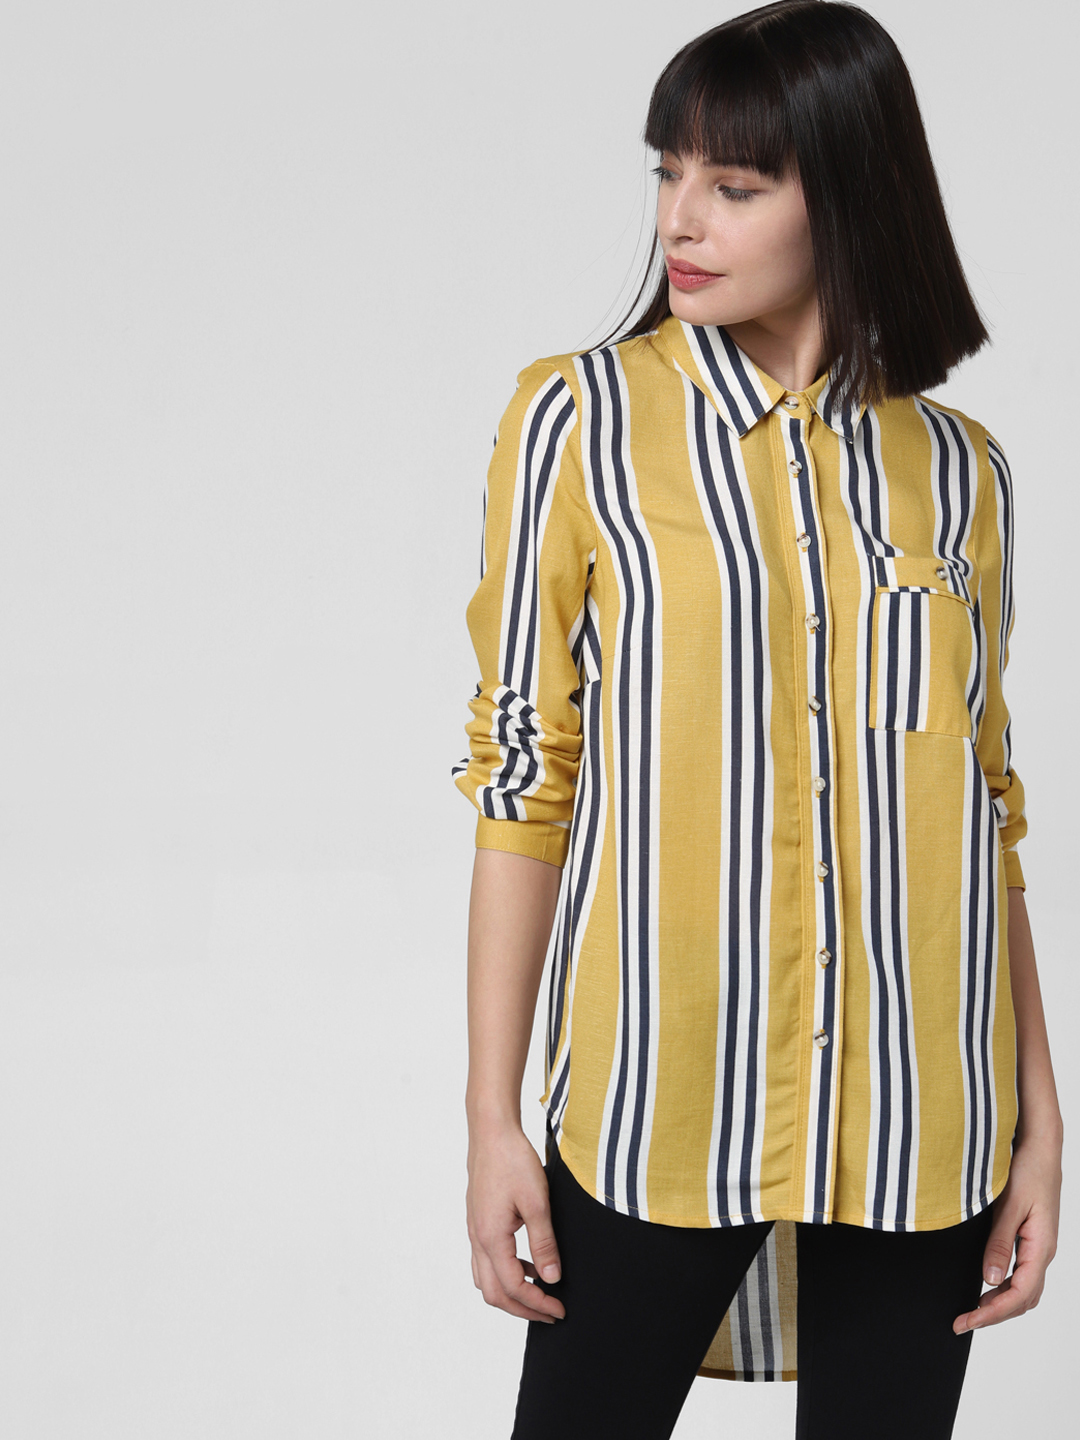 Vero Moda Women Yellow & White Regular Fit Striped Casual Shirt Price in India